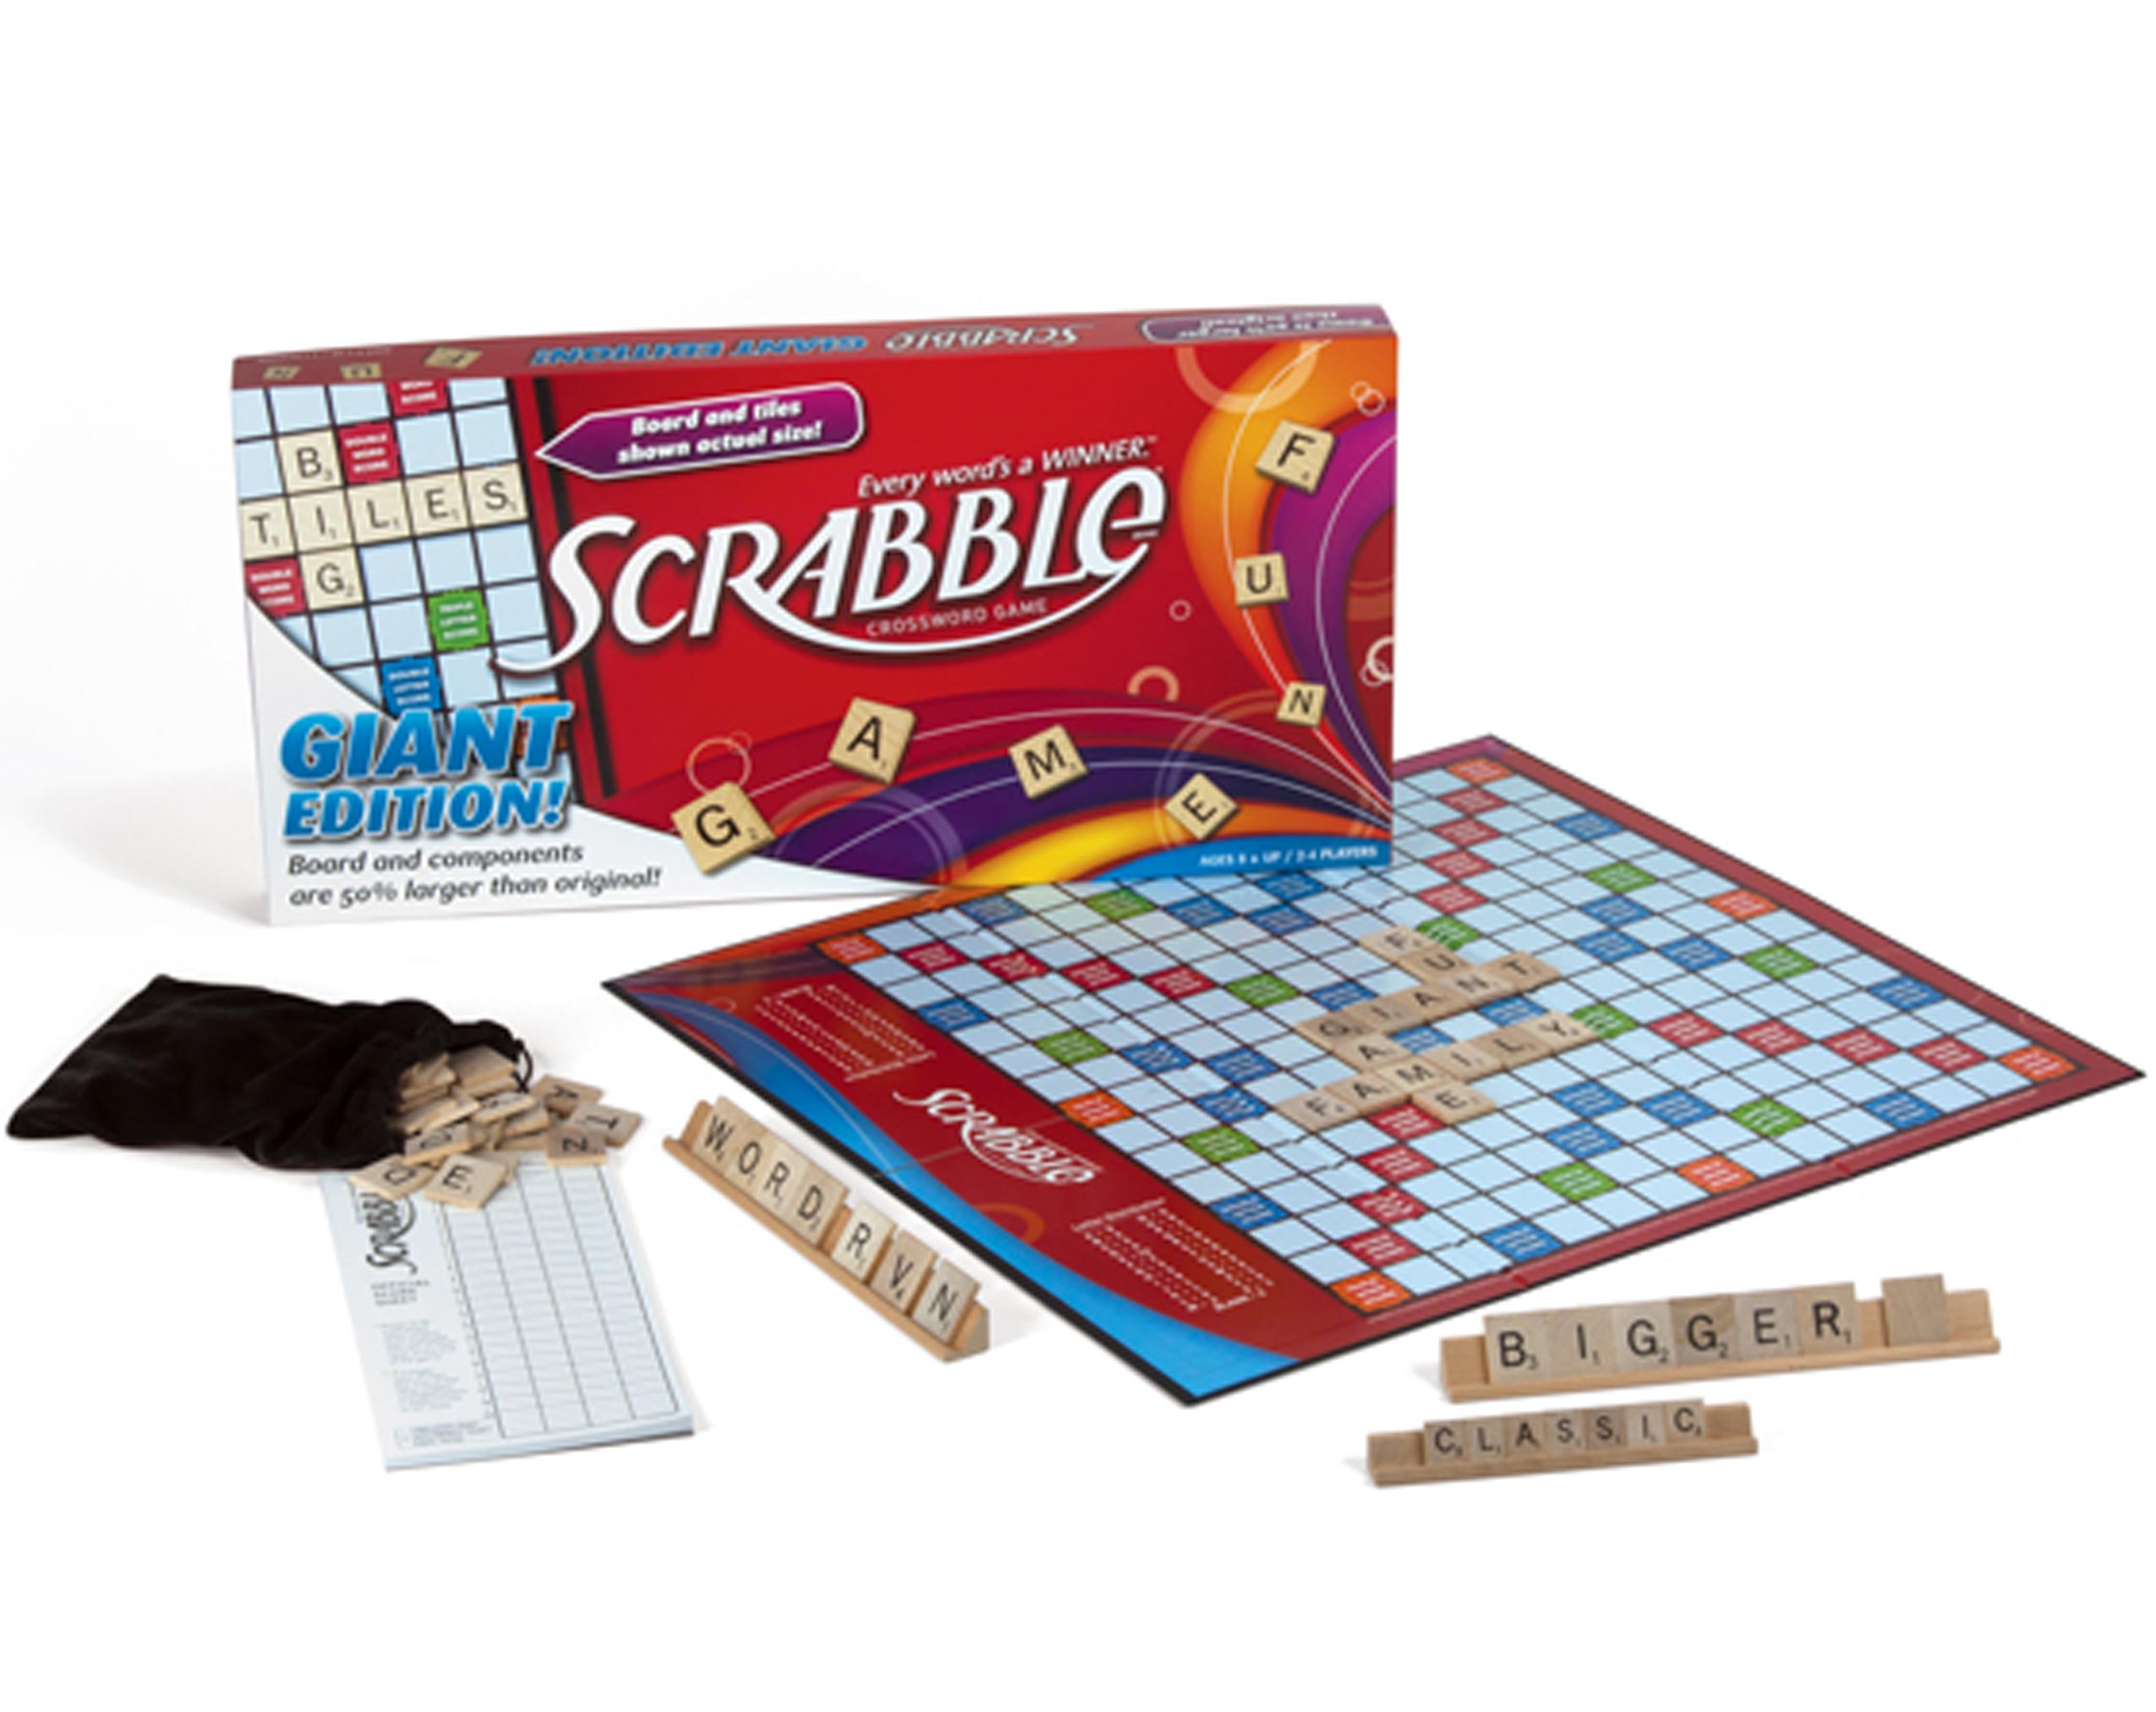 Giant Scrabble 